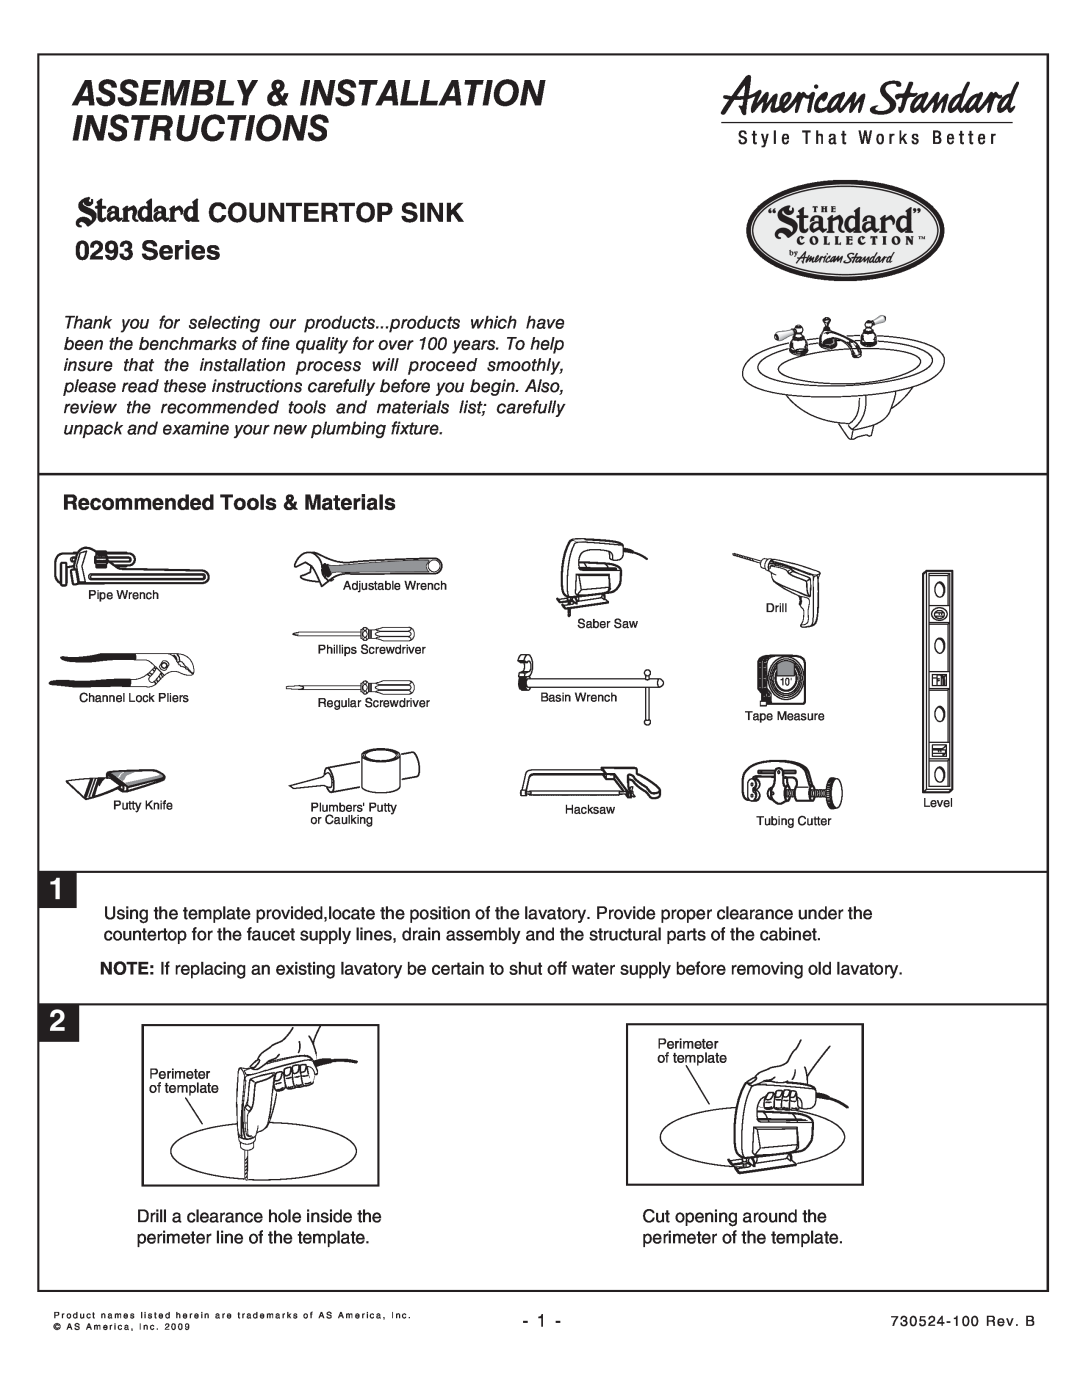 American Standard installation instructions Assembly & Installation Instructions, COUNTERTOP SINK 0293 Series 